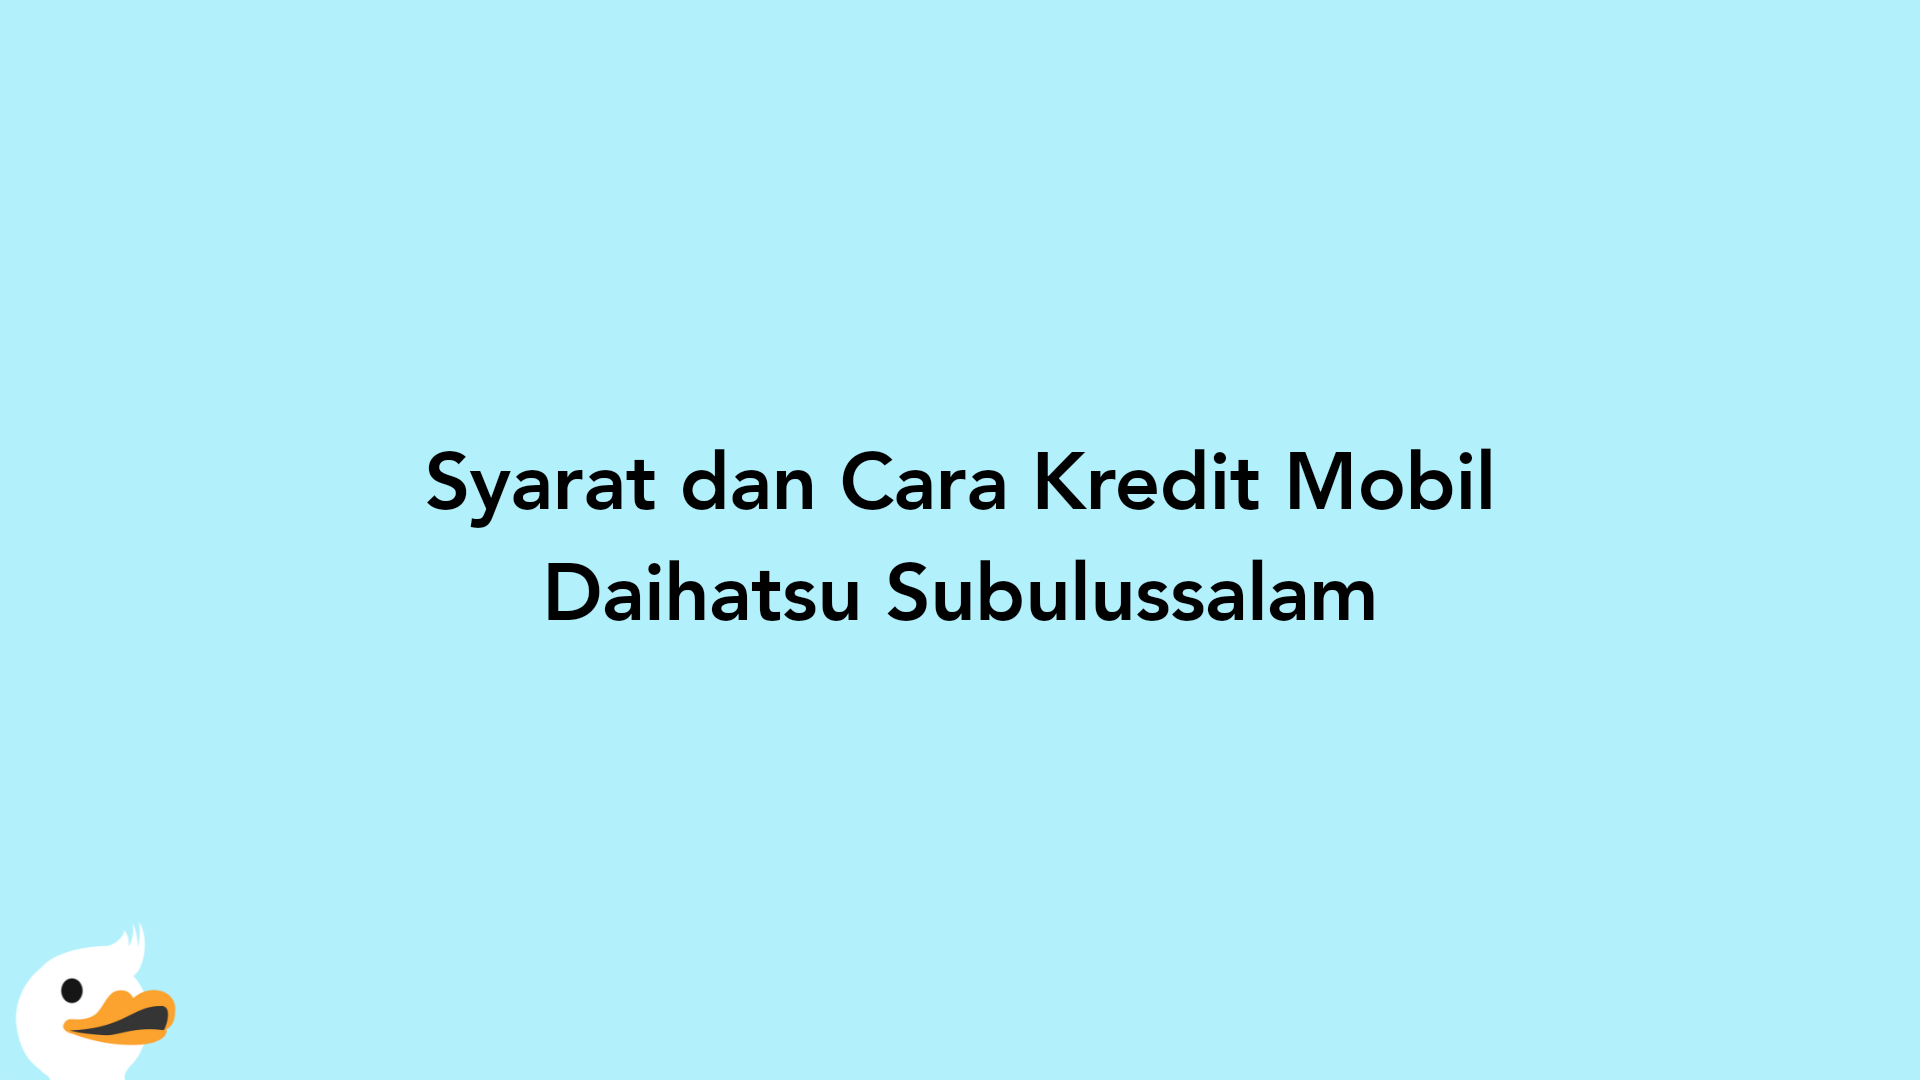 Syarat dan Cara Kredit Mobil Daihatsu Subulussalam